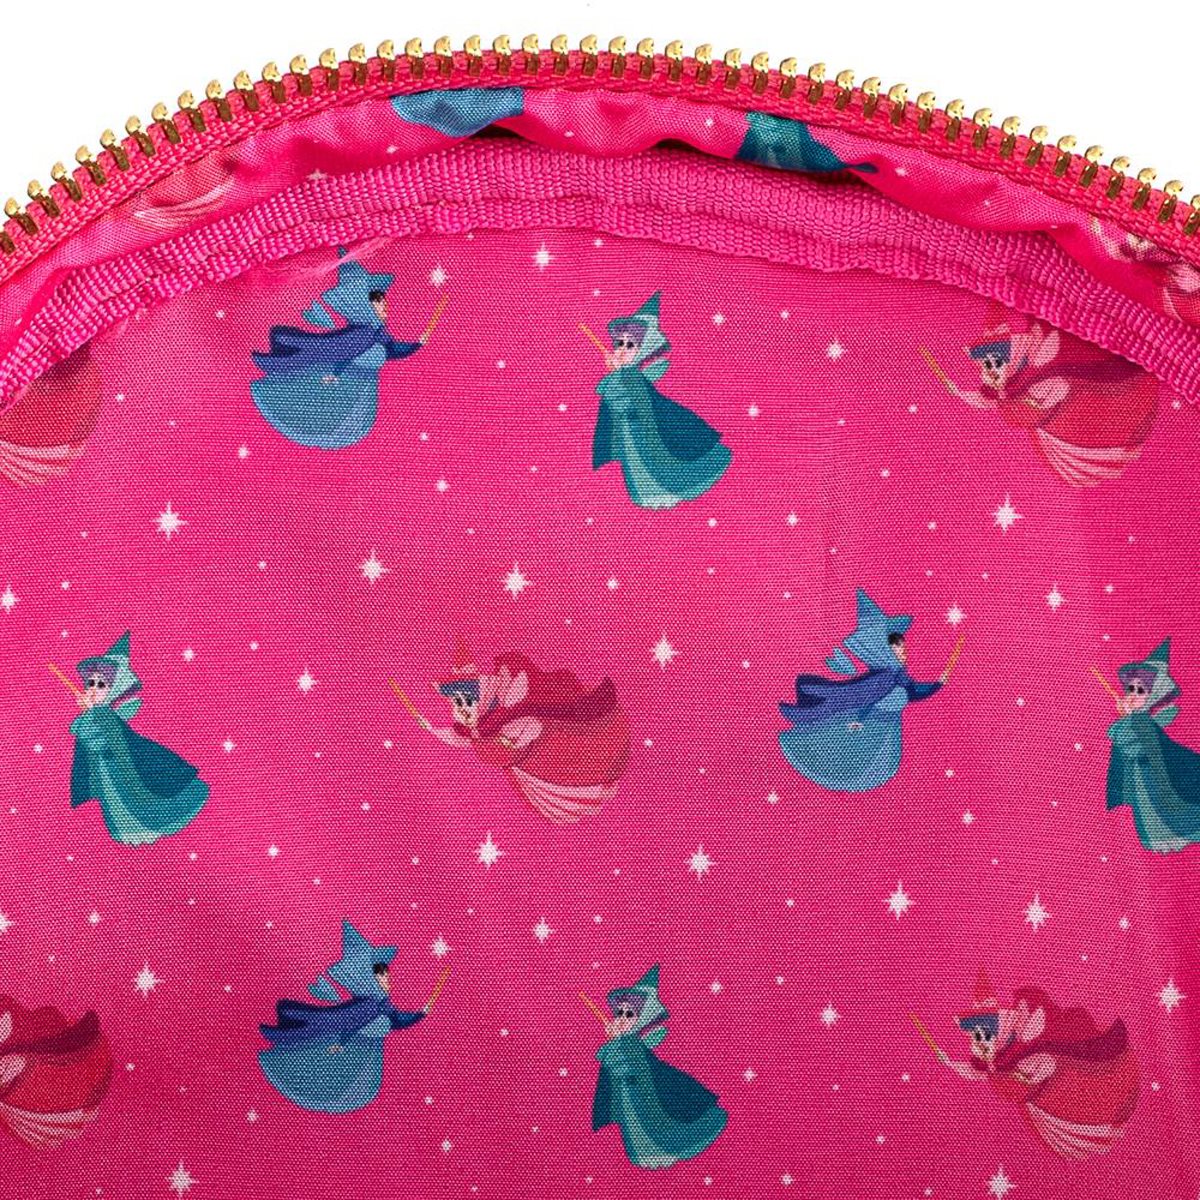 Loungefly Disney Sleeping Beauty Flowers and Fairies Mini Backpack